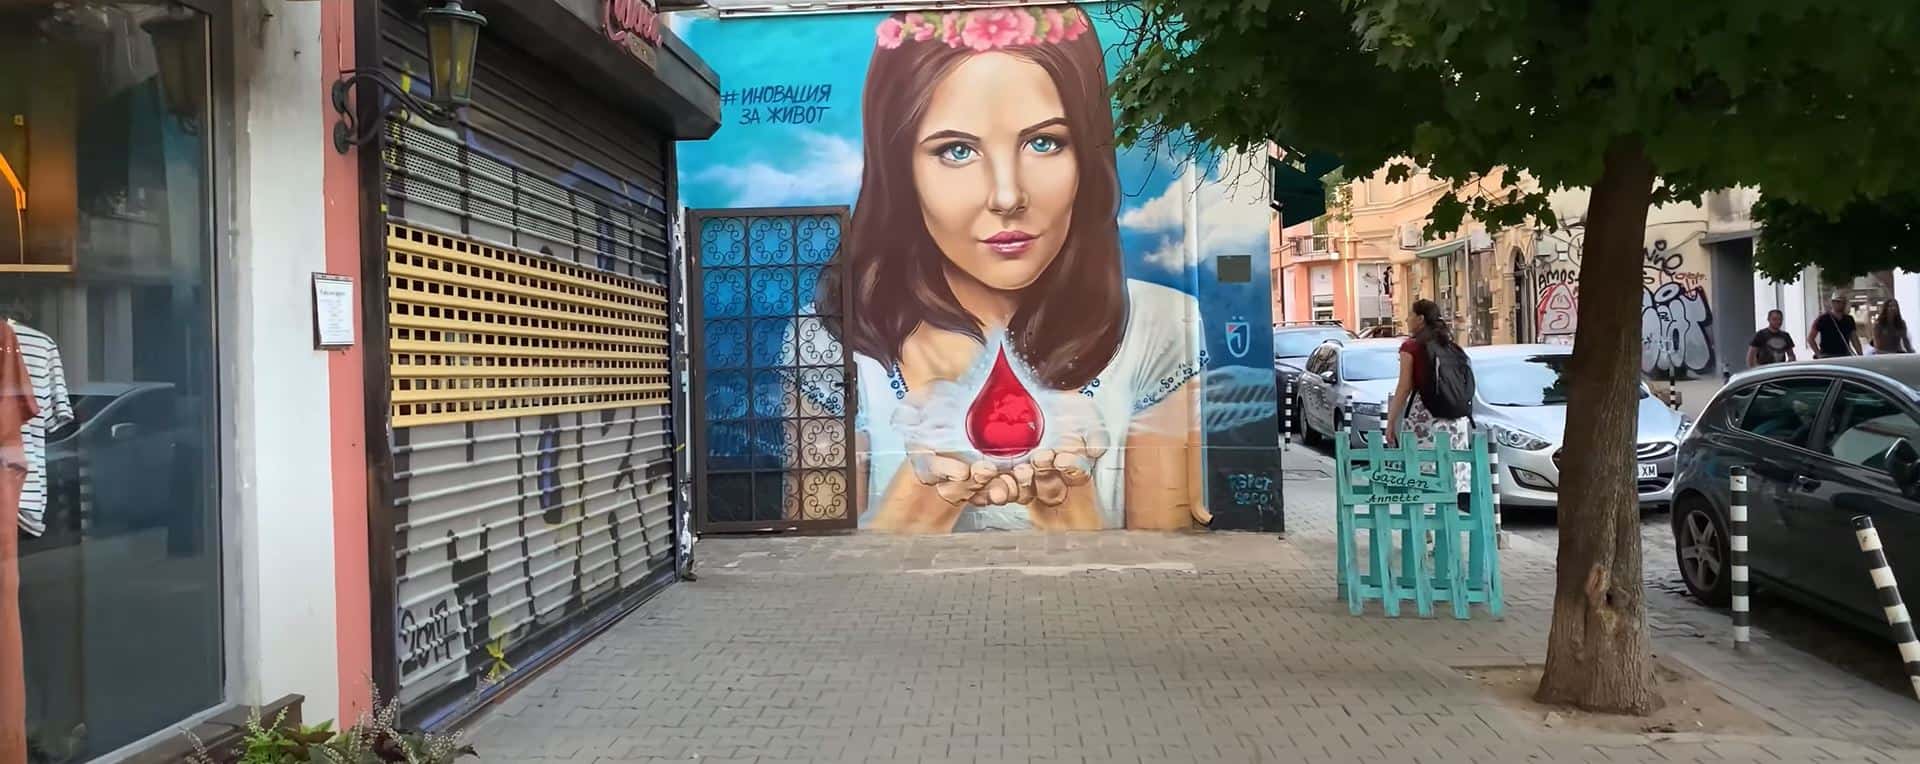 Spectacular Street Art in Sofia, Bulgaria